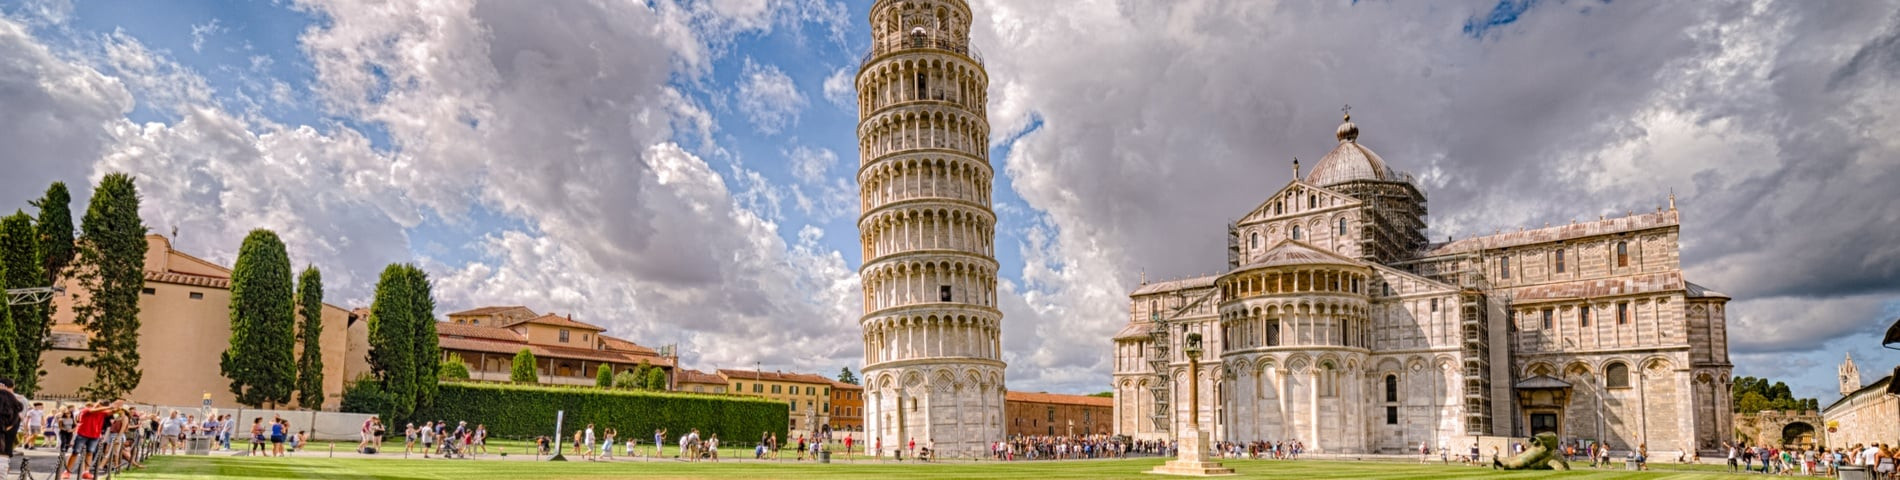 Pisa - Andra examinationer